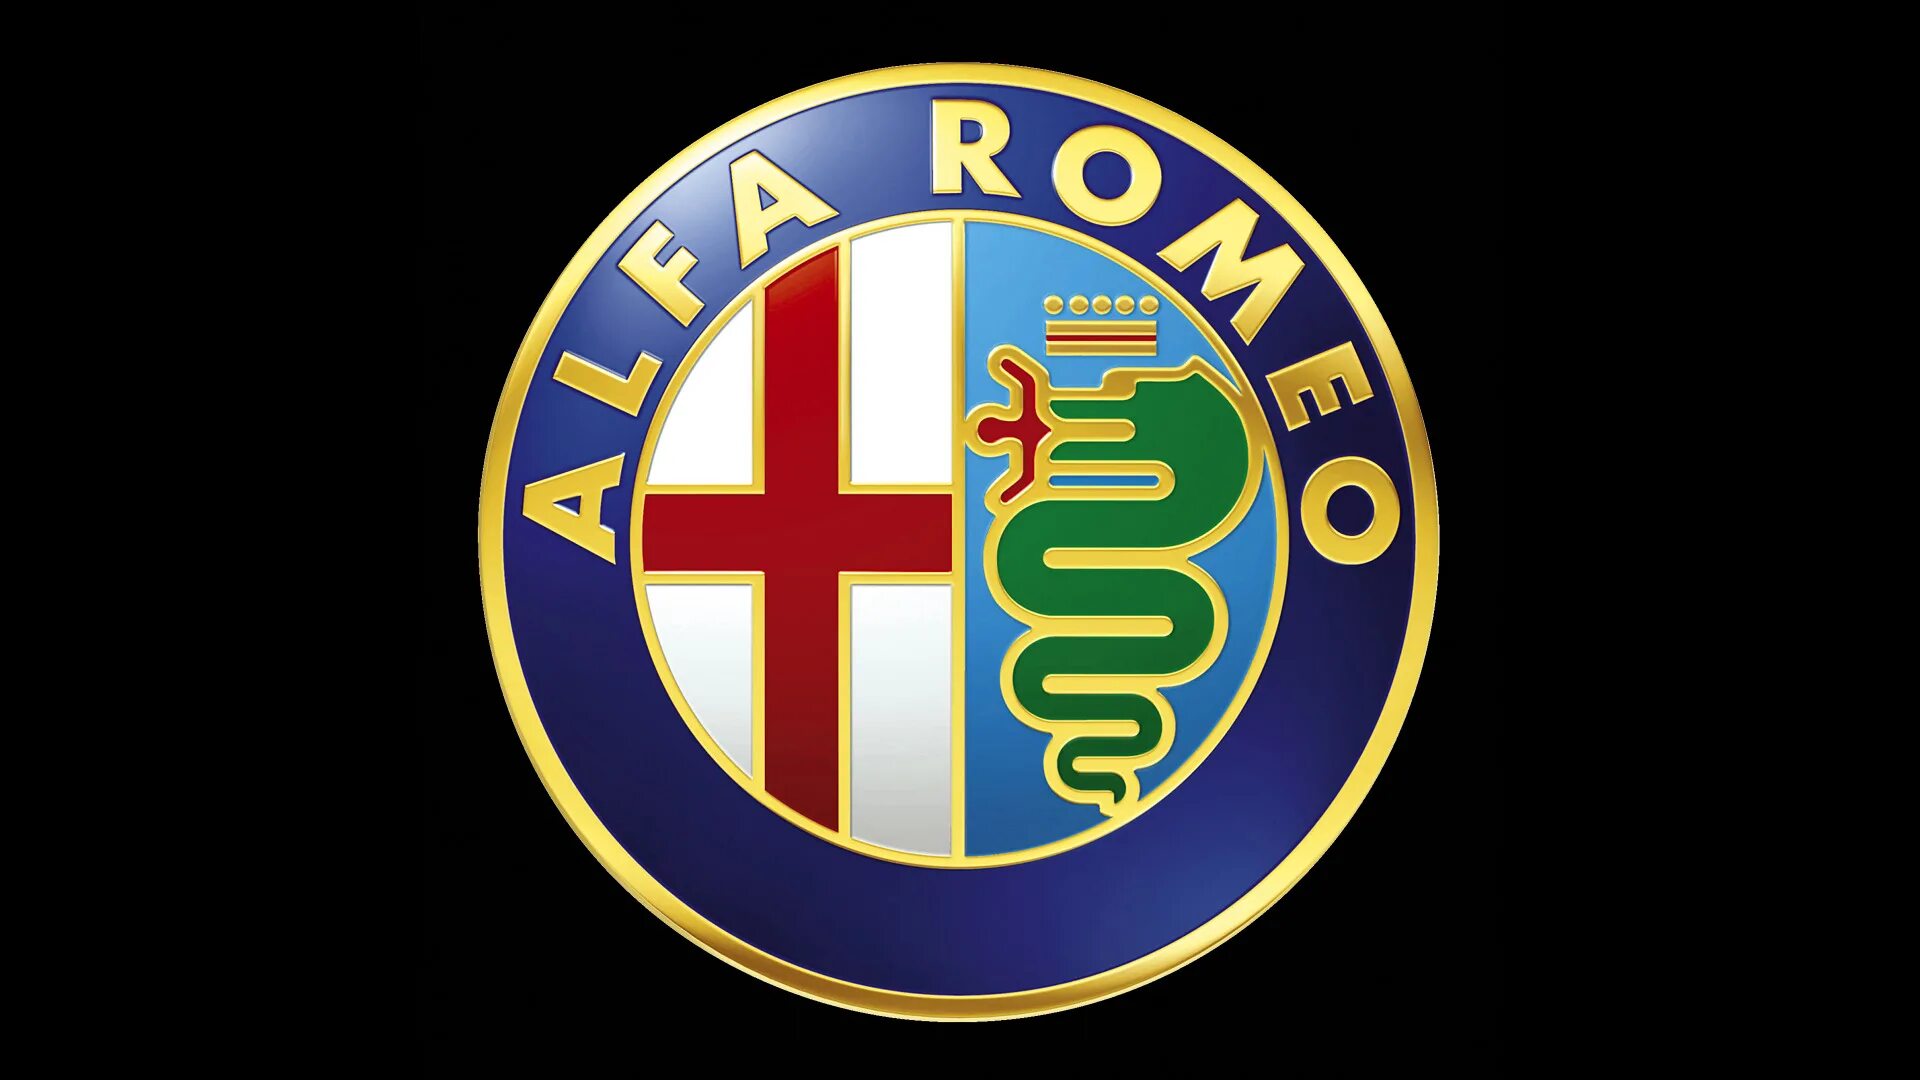 Знак альфа ромео. Alfa Romeo logo. Альфа Ромео значок. Лаготип Alpha Romeo. Альфа Ромео значок старый.